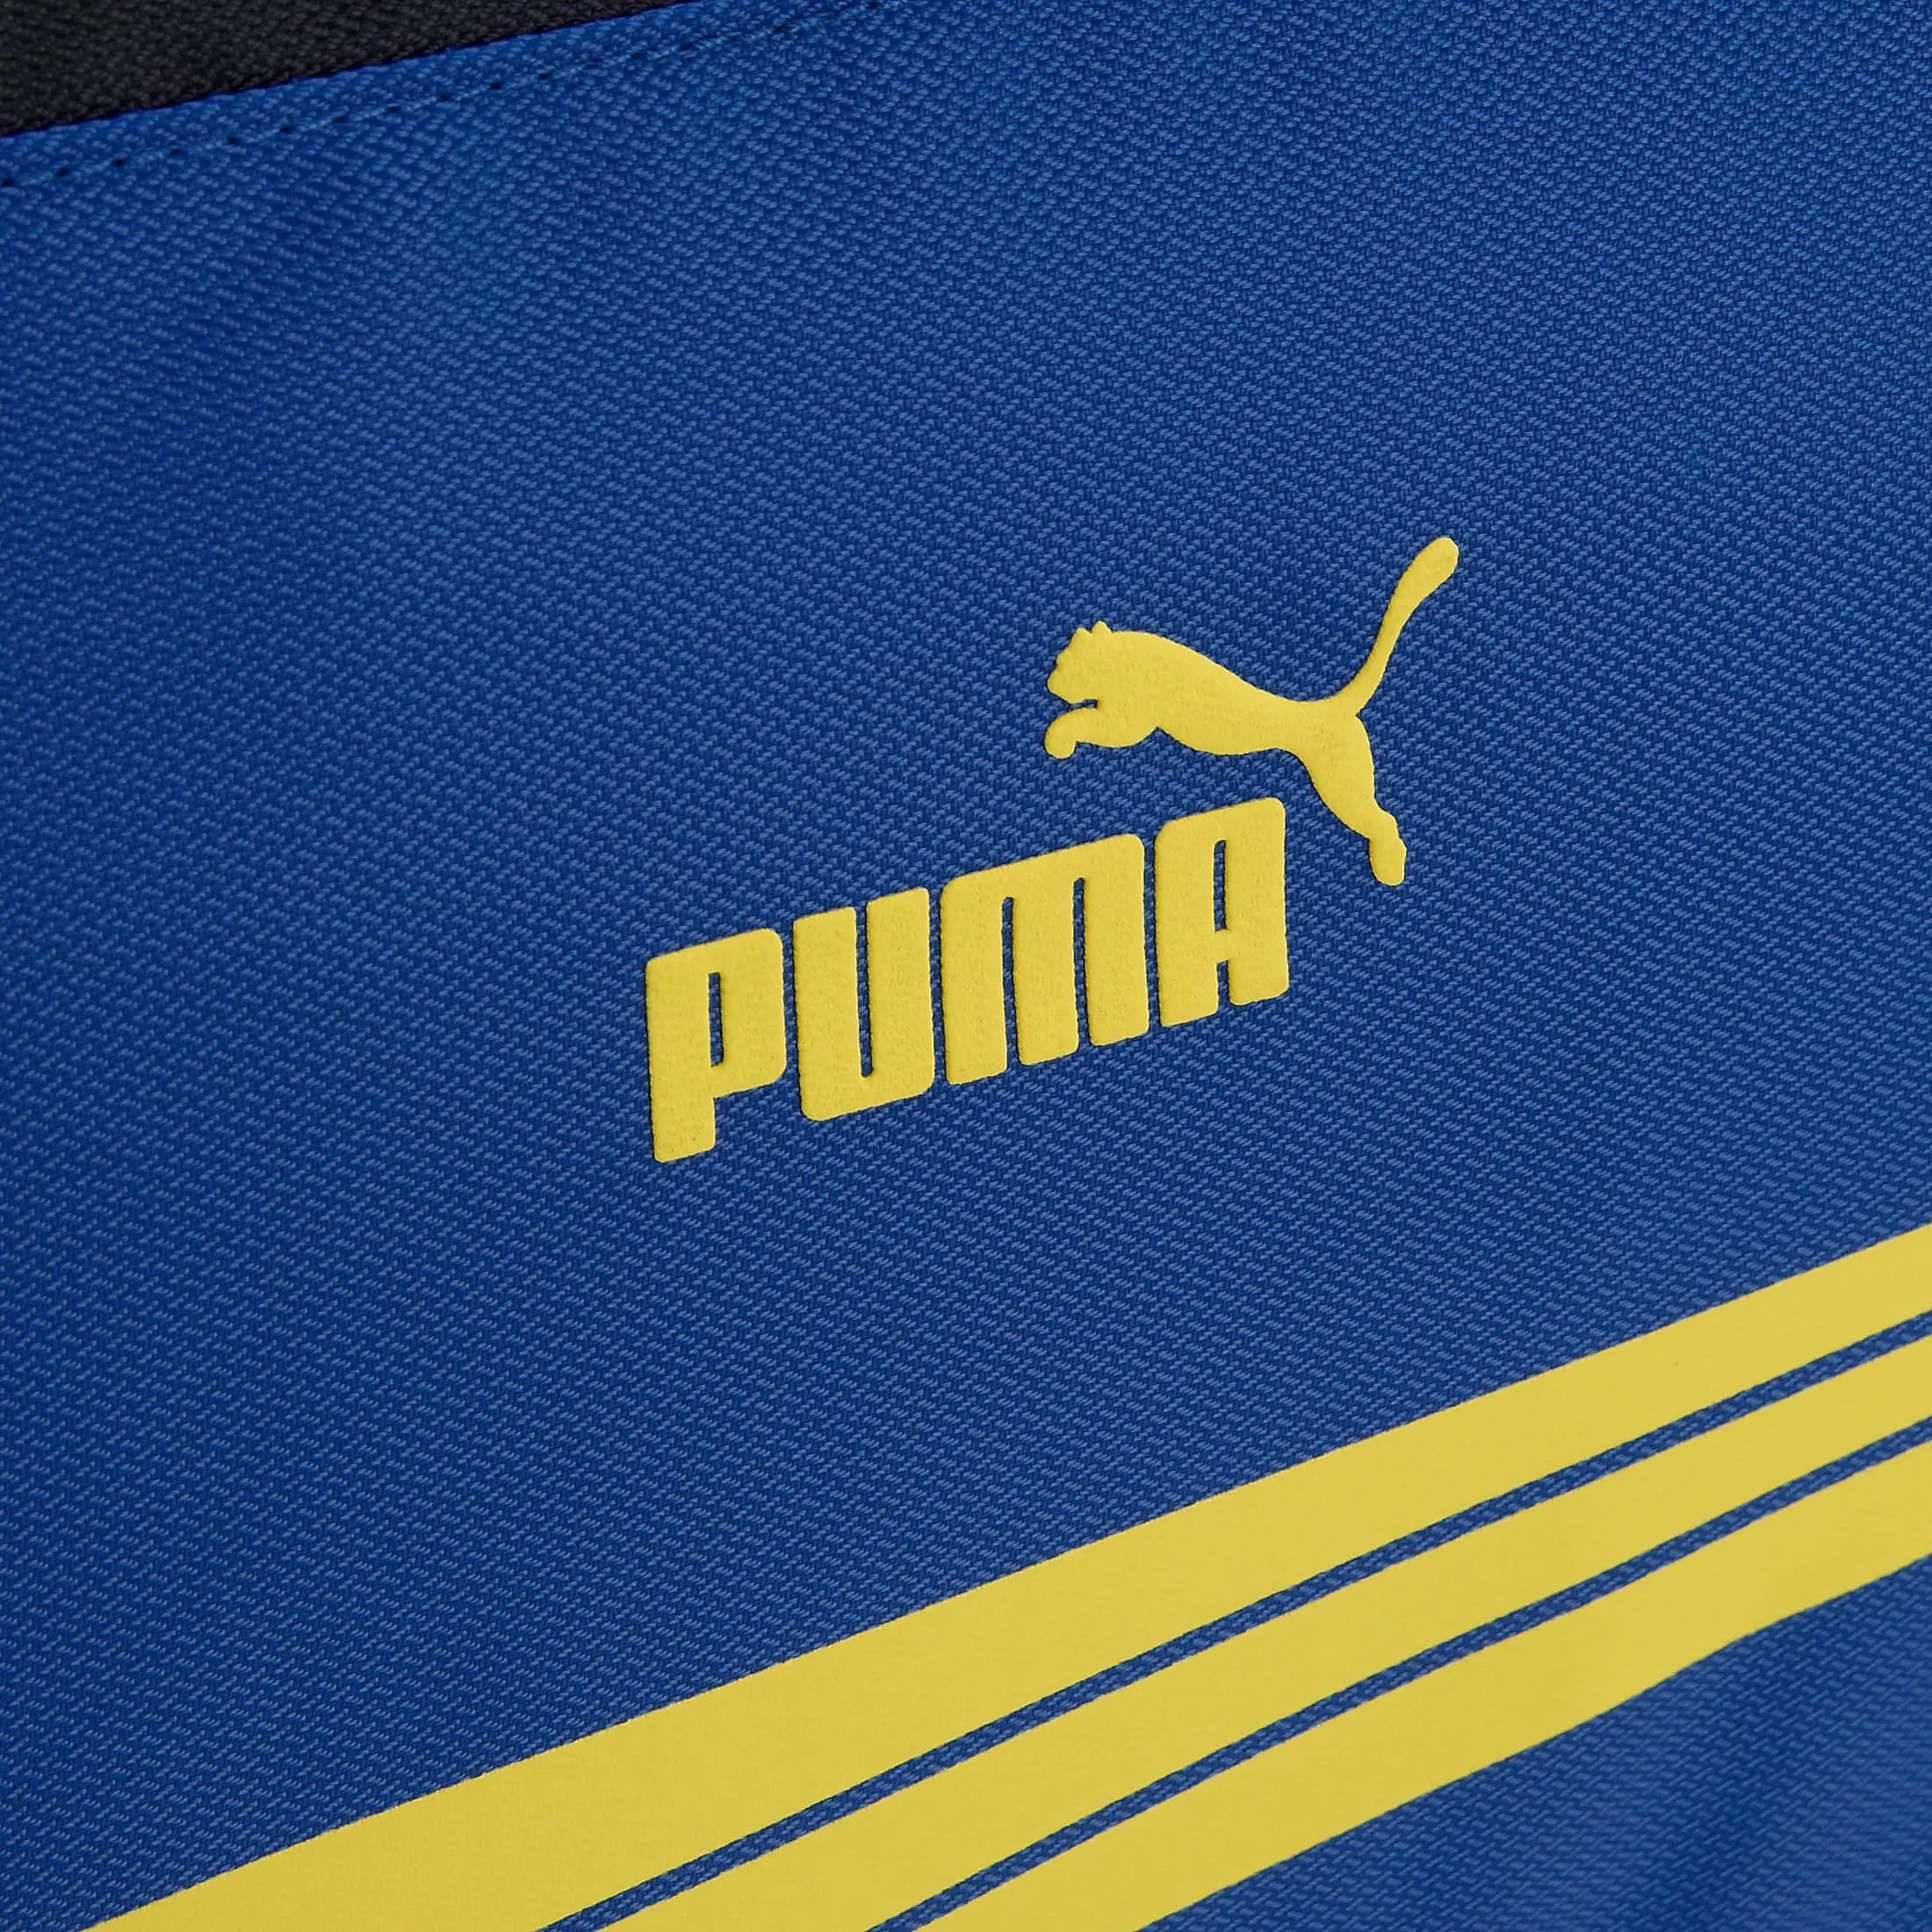 Puma Sole Grip Bag sac bandoulière 44 cm - bleu victoria-new marine-buttercup